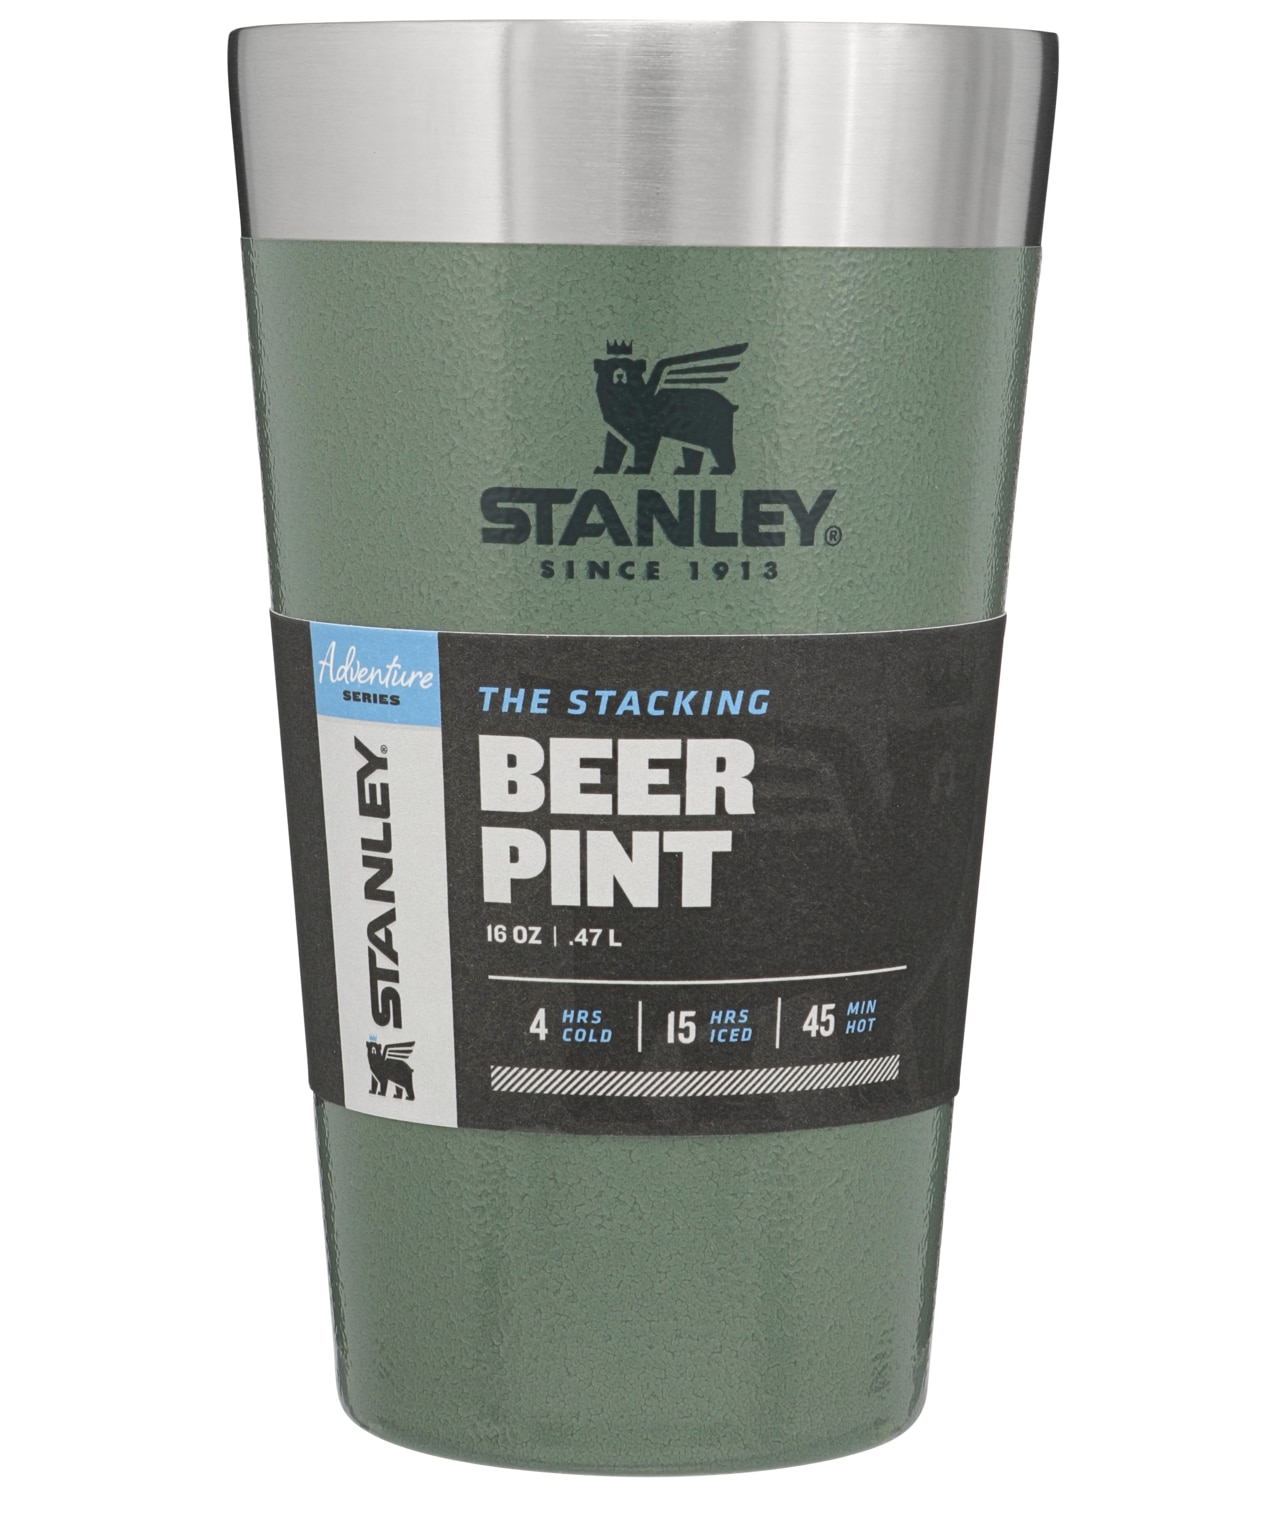 Stanley Adventure 16oz Stacking Beer Pint in Stainless Steel